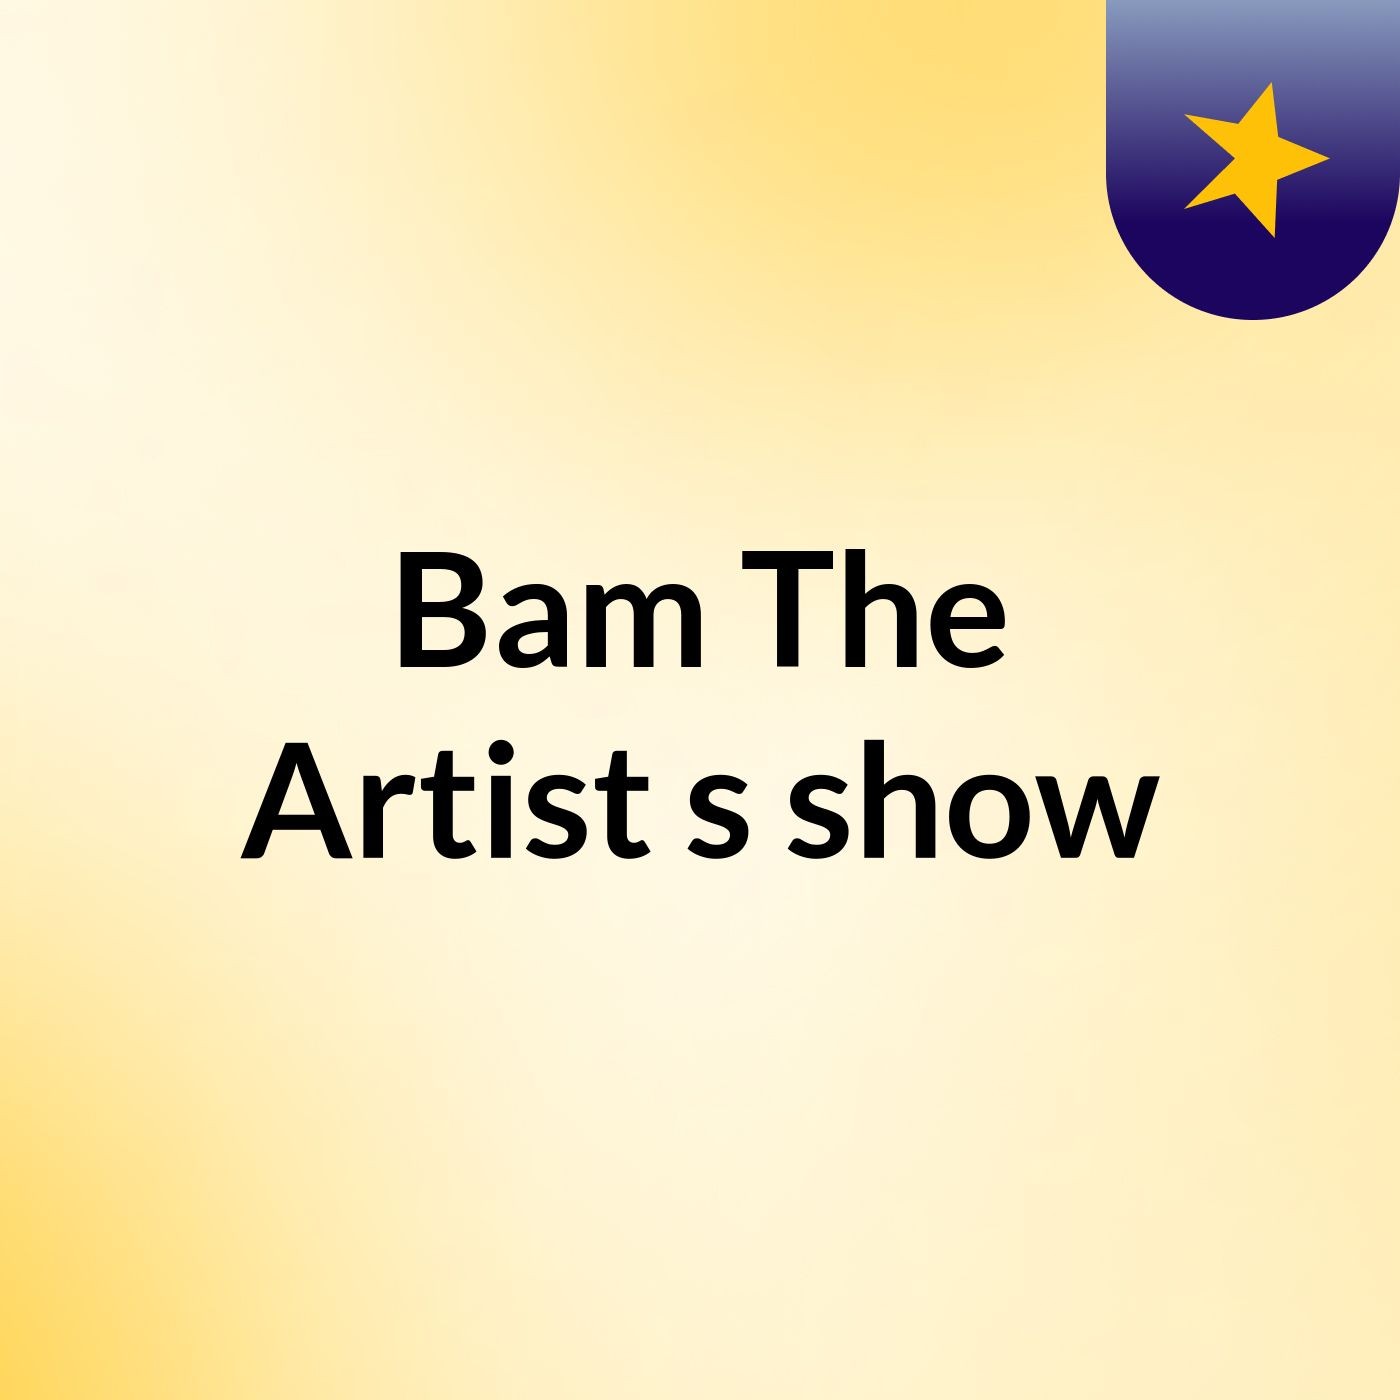 Bam The Artist's show